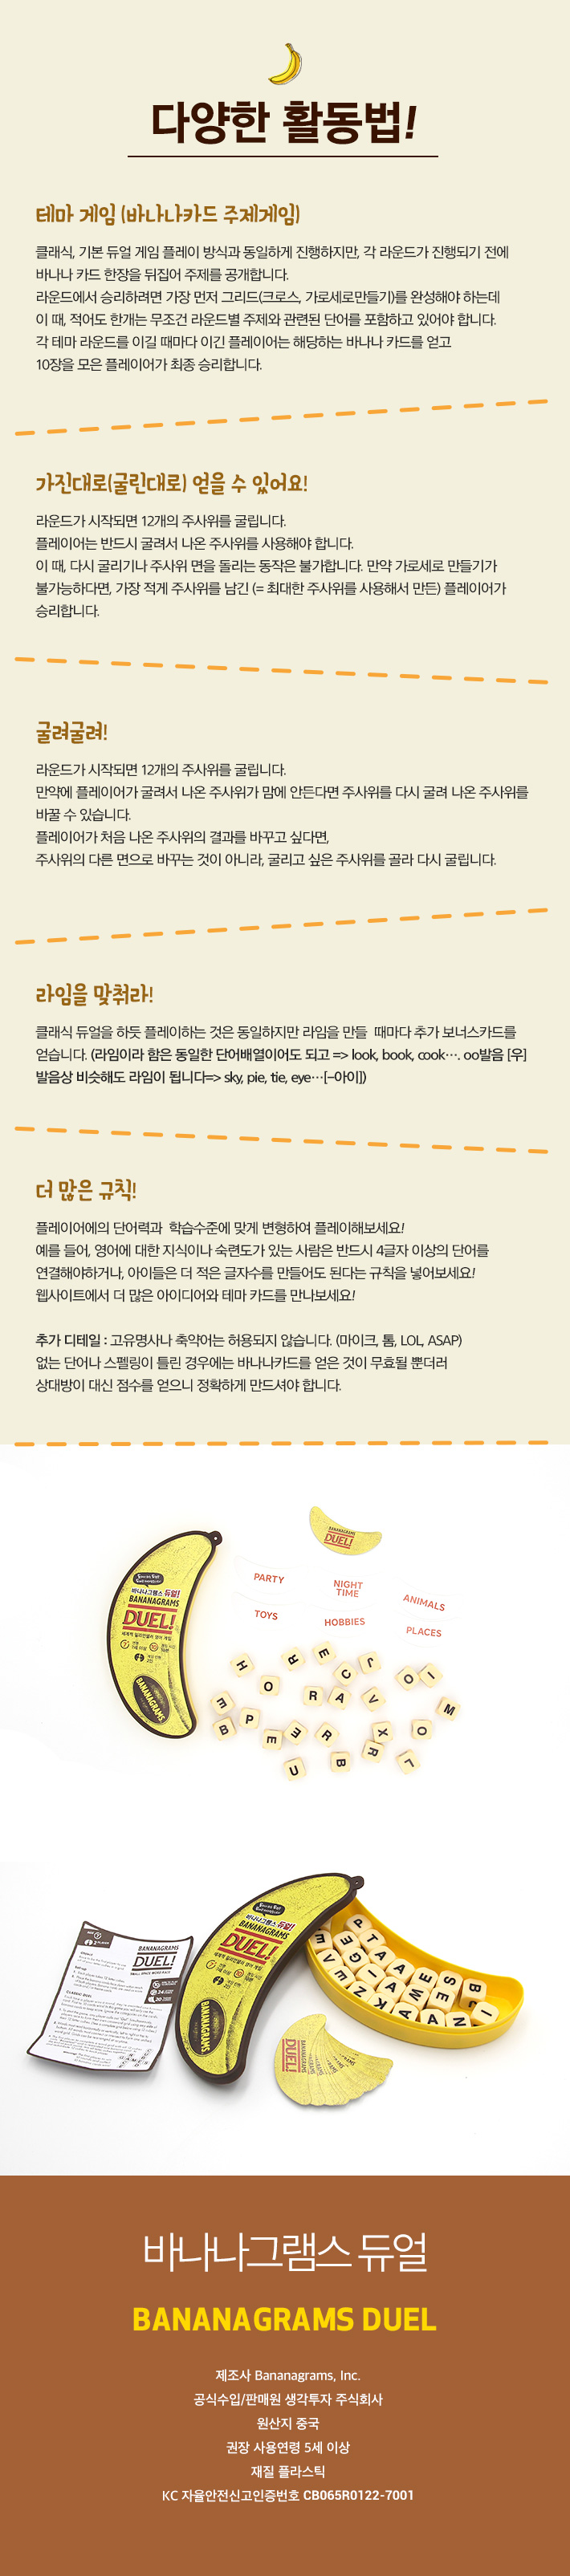 bananagrams duel_710 (5).jpg